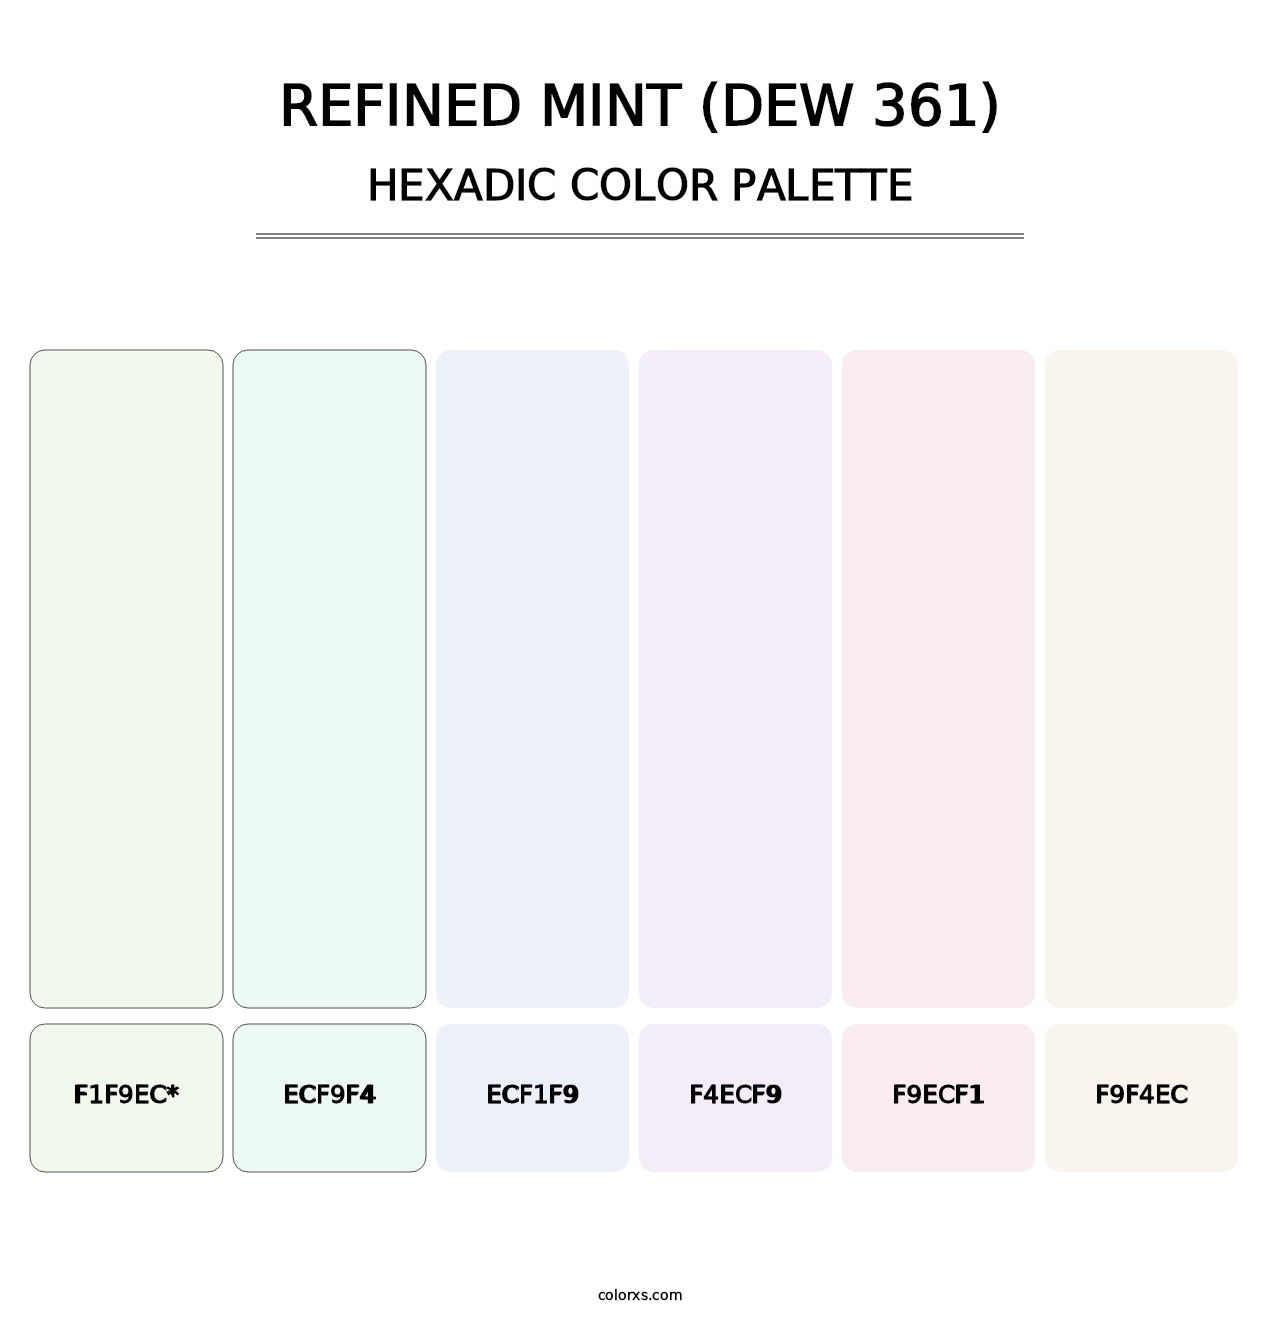 Refined Mint (DEW 361) - Hexadic Color Palette